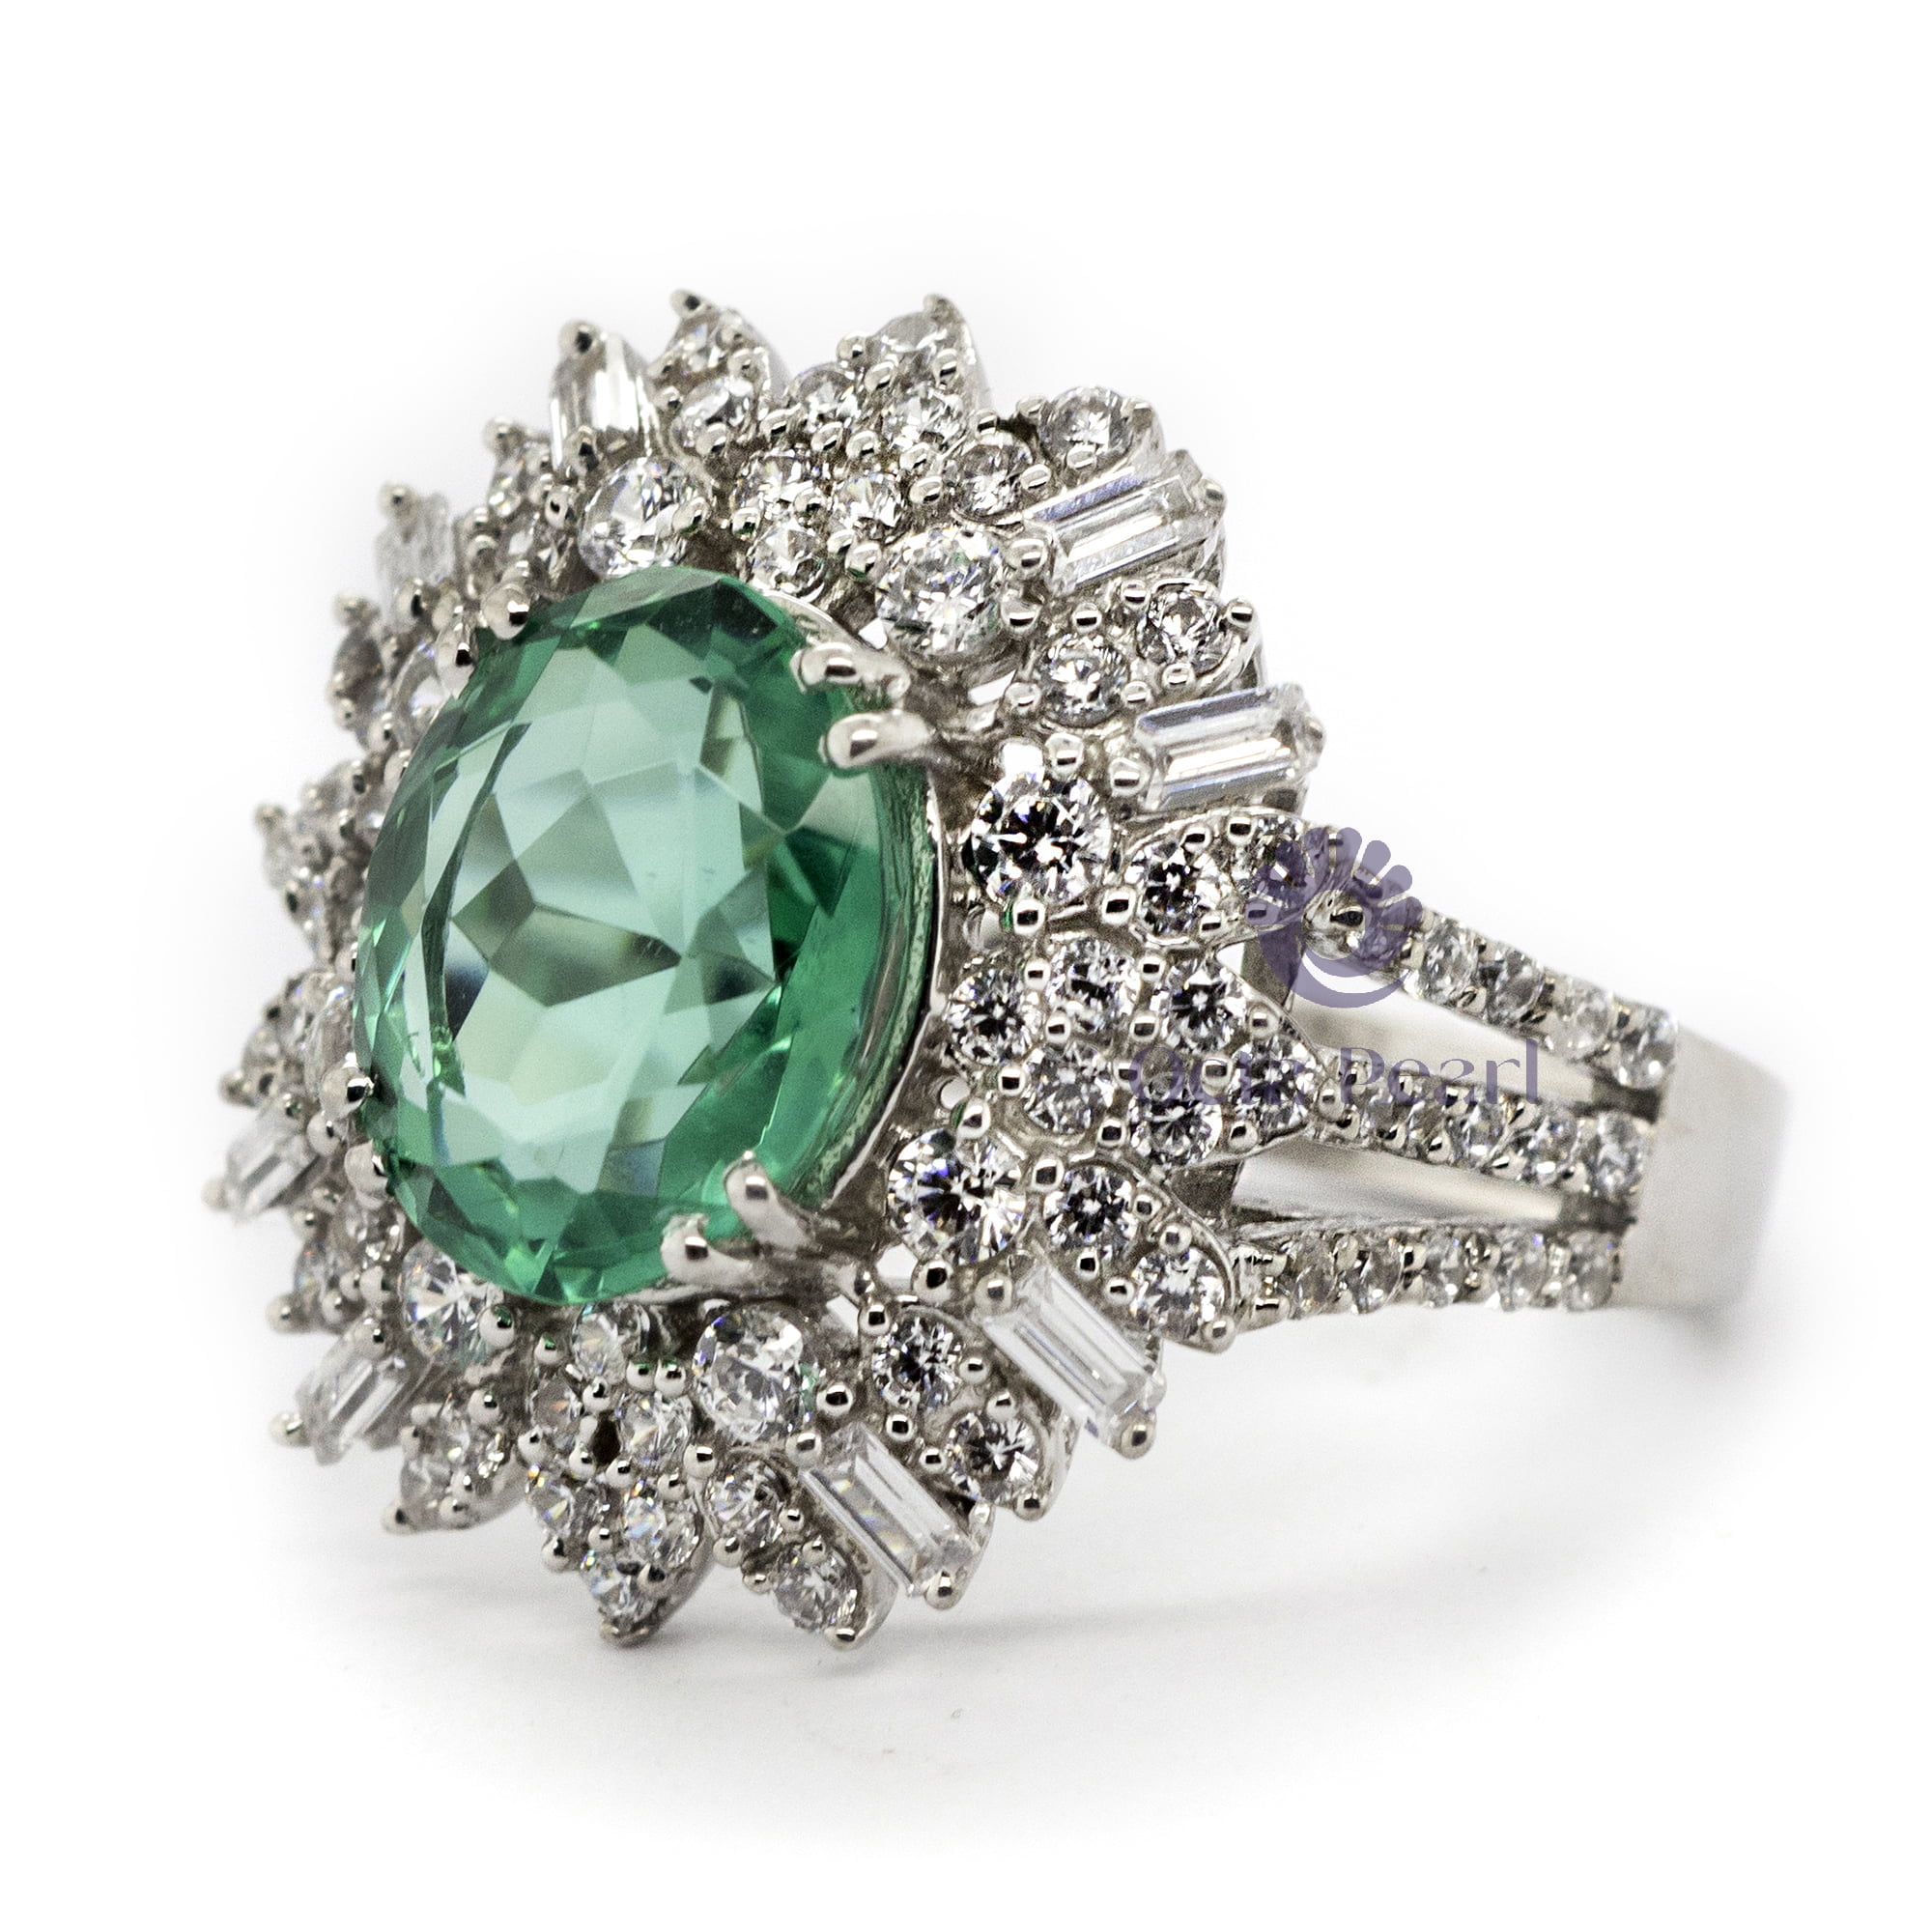 12x10 MM Green Oval Cut CZ Stone Wedding Engagement Sunburst Ring For Women